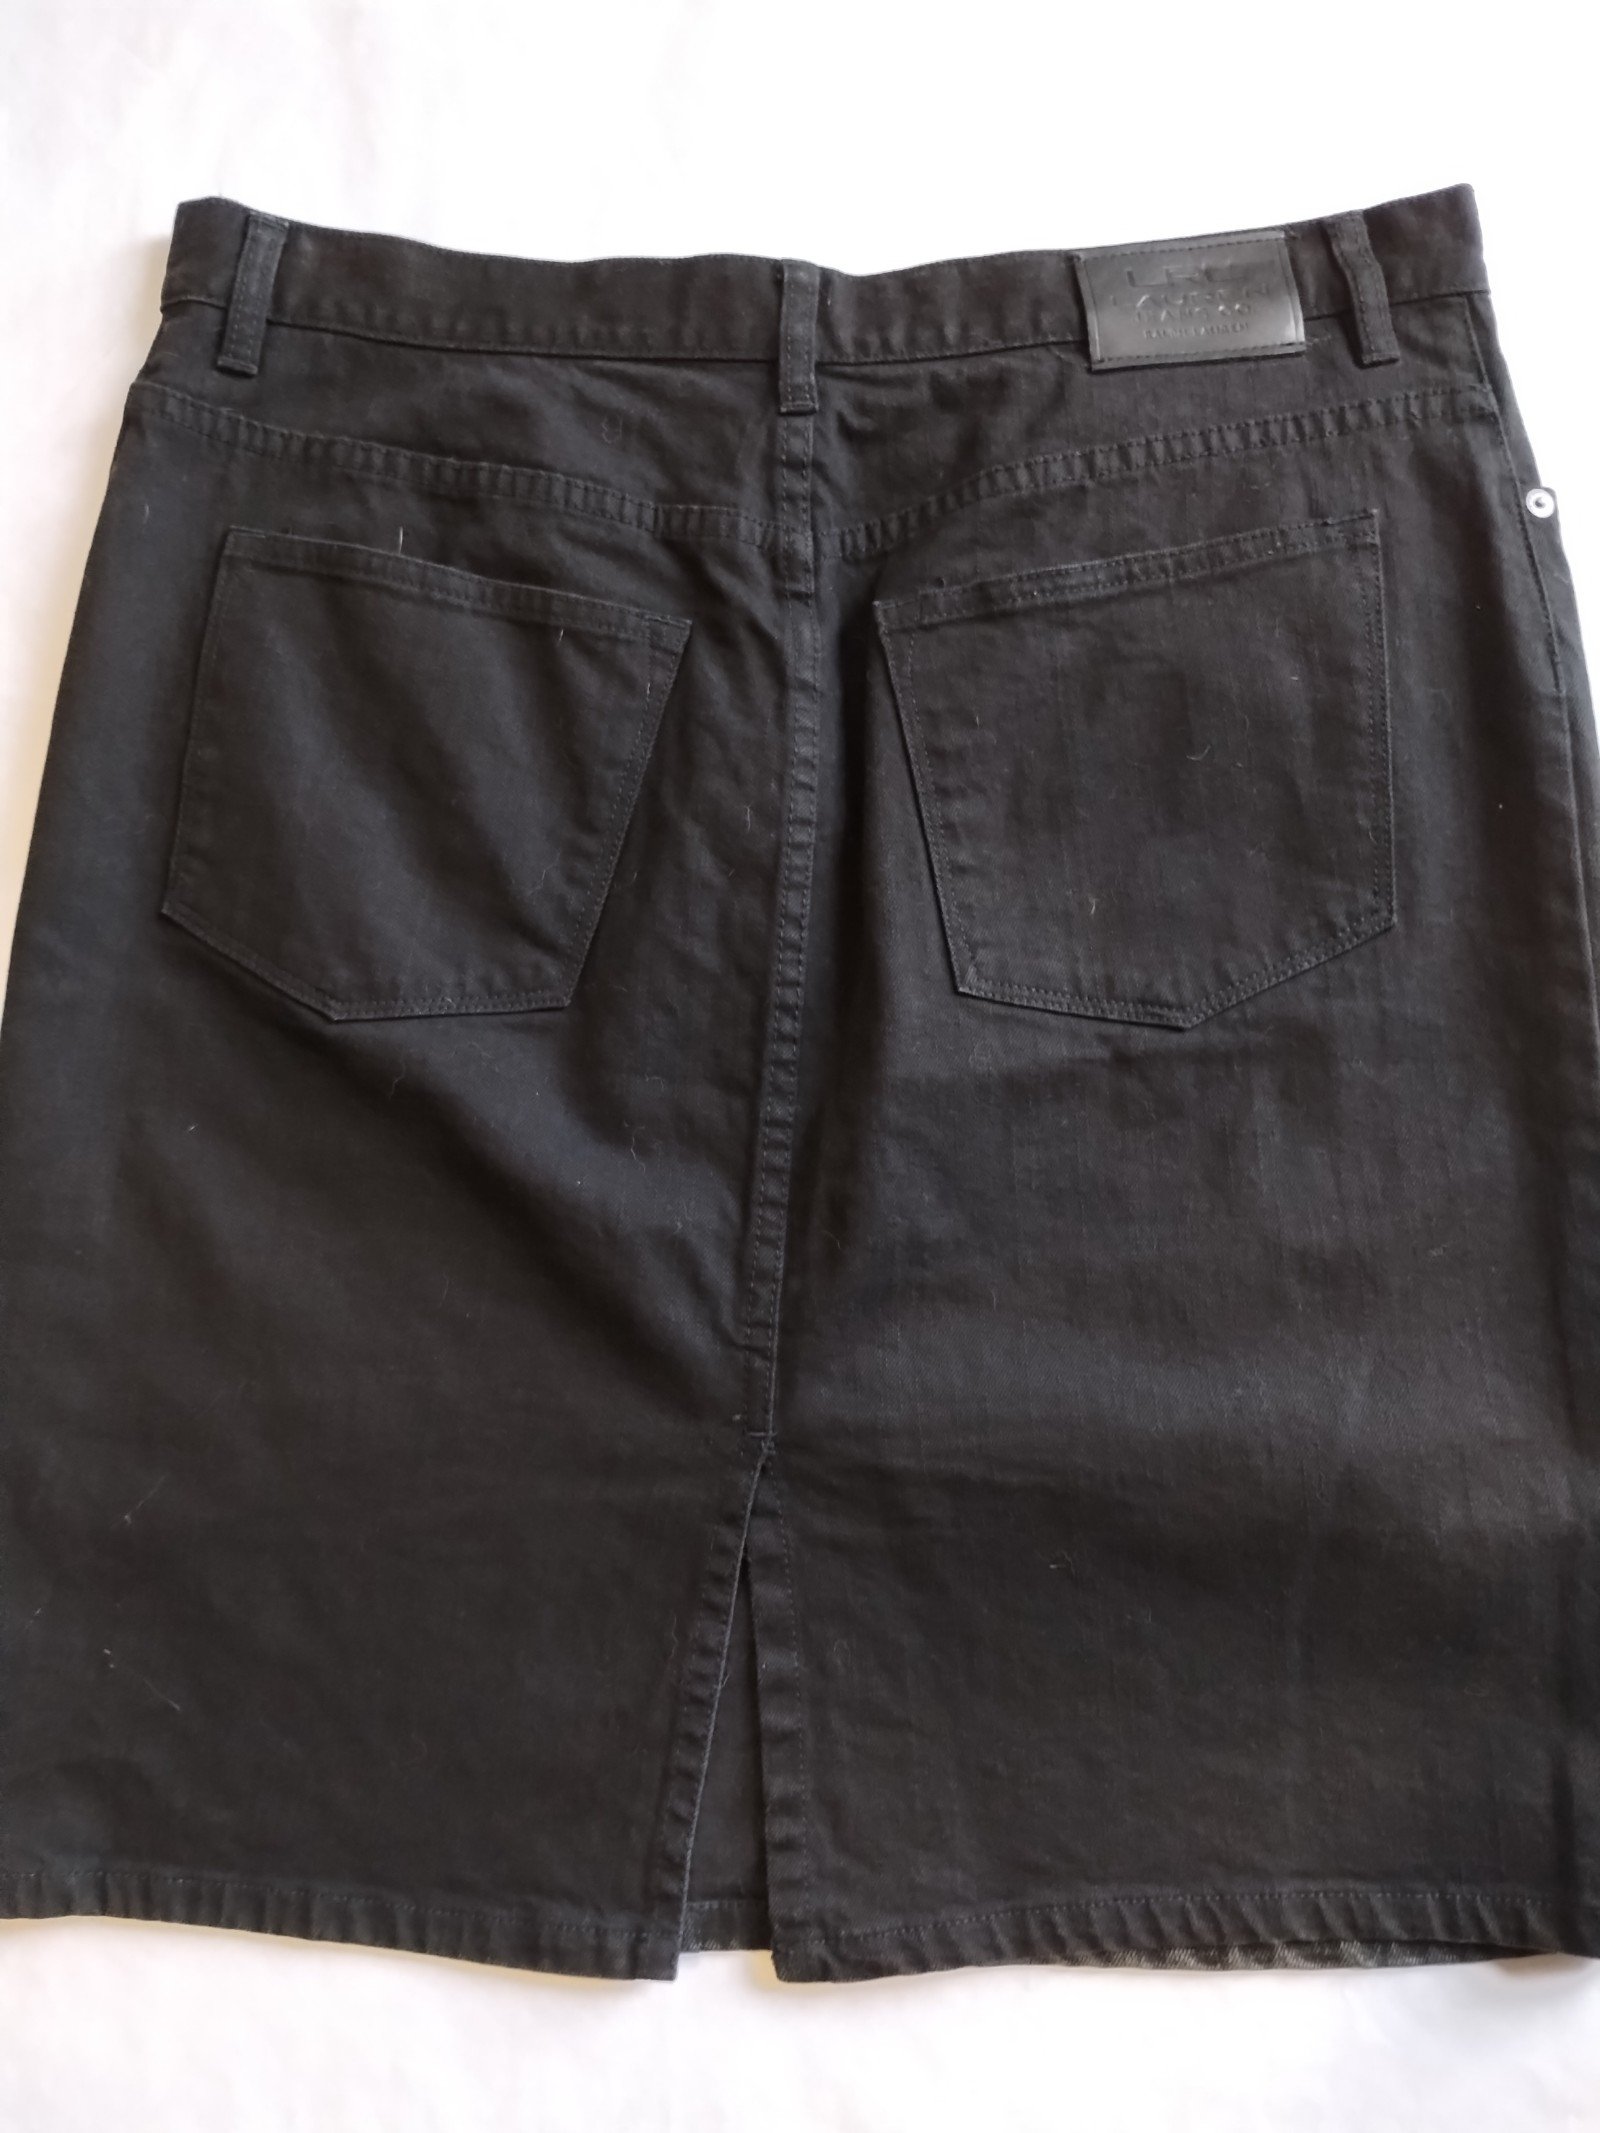 cheapest place to buy  LAUREN RALPH LAUREN Women´s Black Jean Skirt Size 14 KN6Z7v1JD Outlet Store